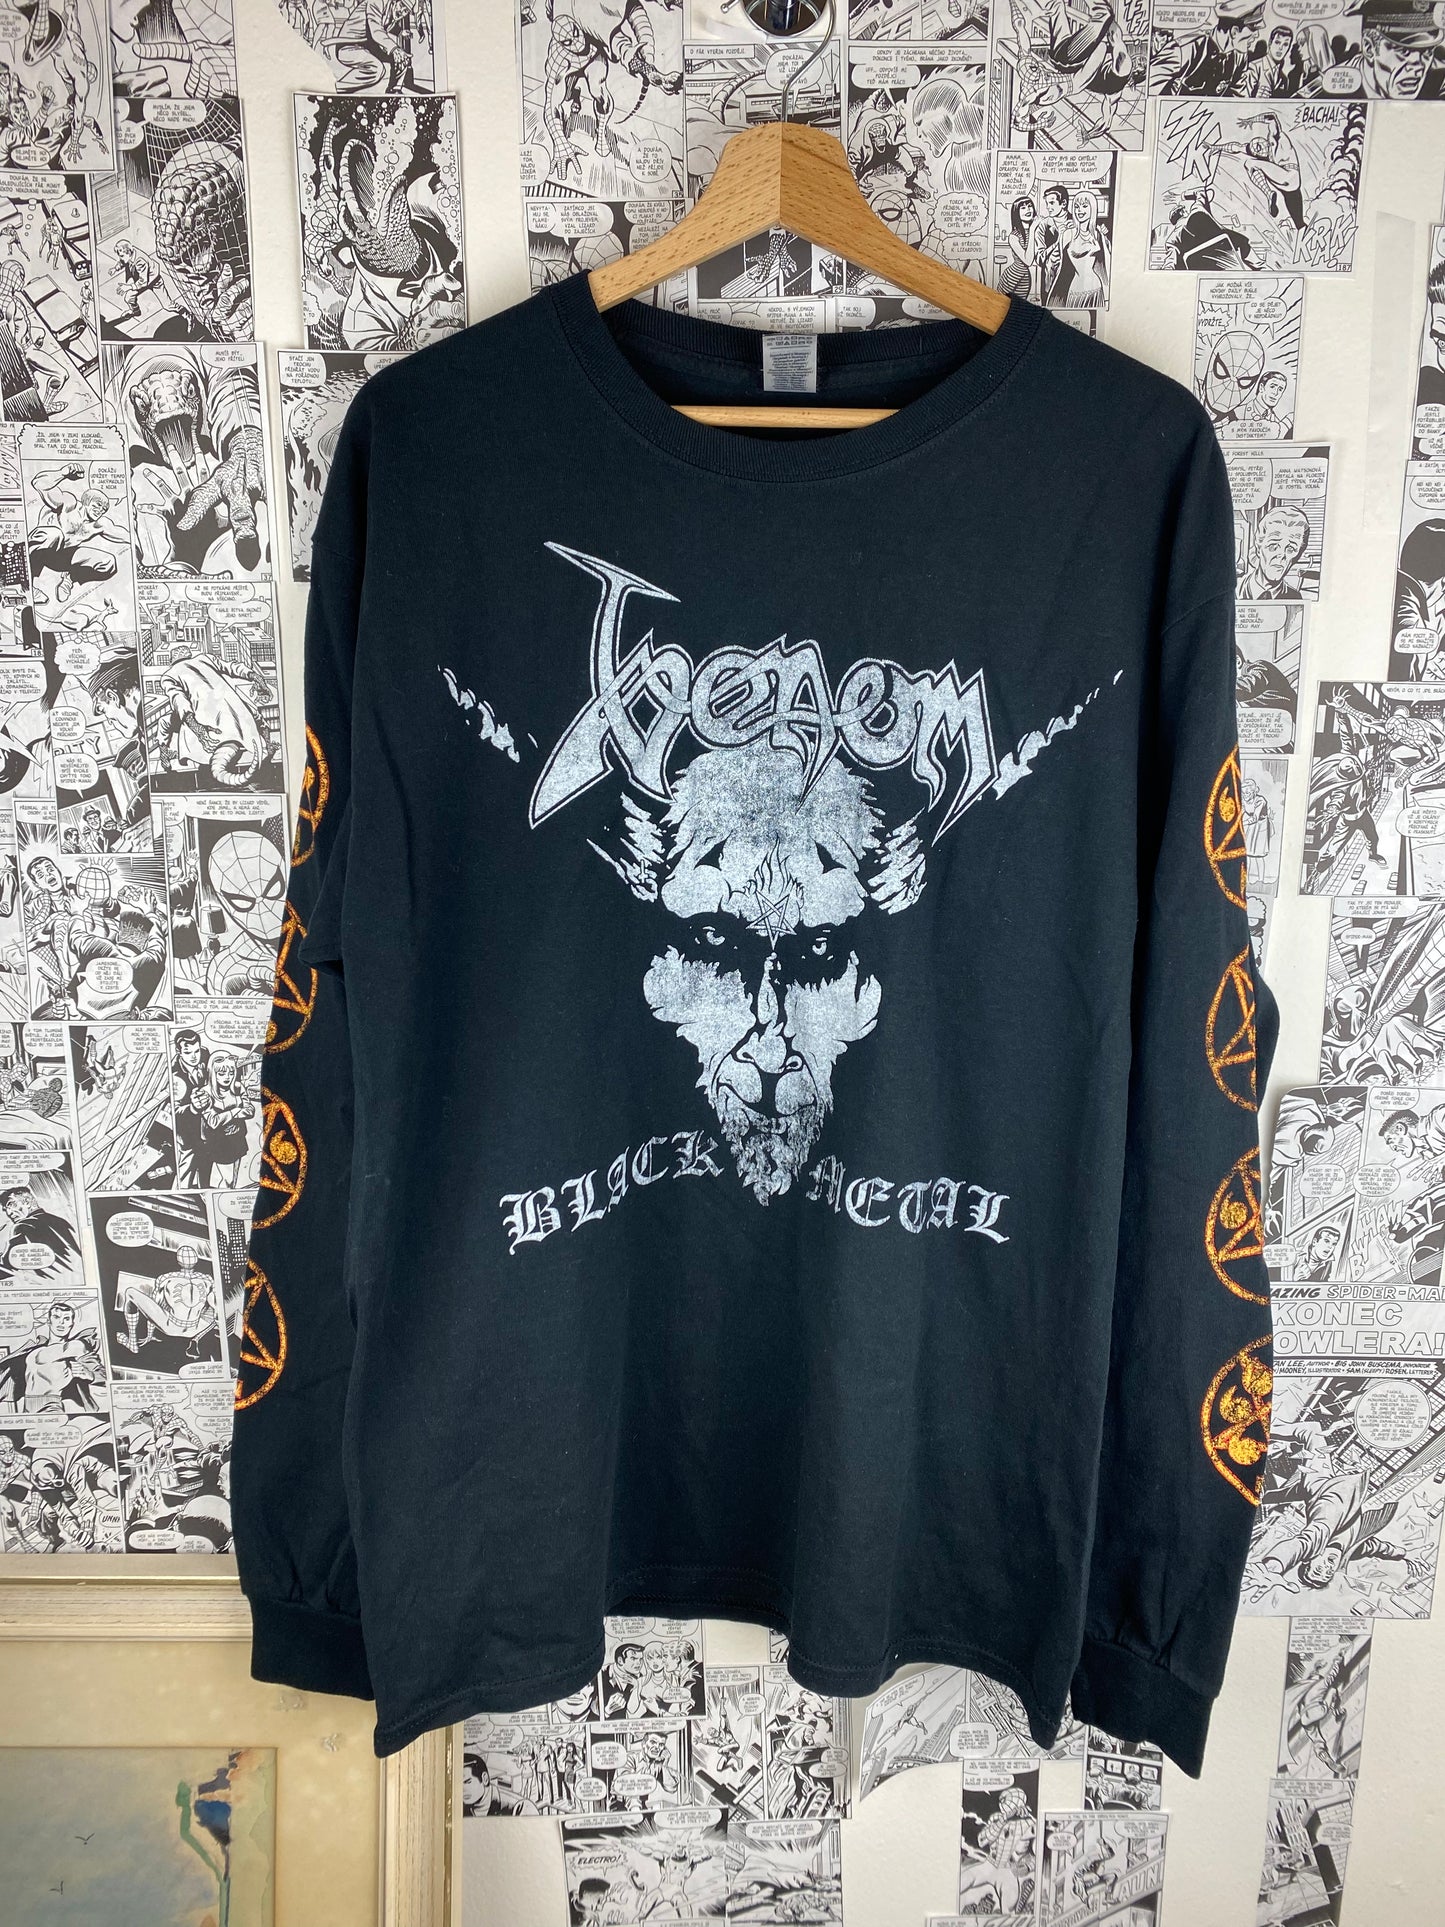 Vintage Venom “Black Metal” 00s t-shirt - size L